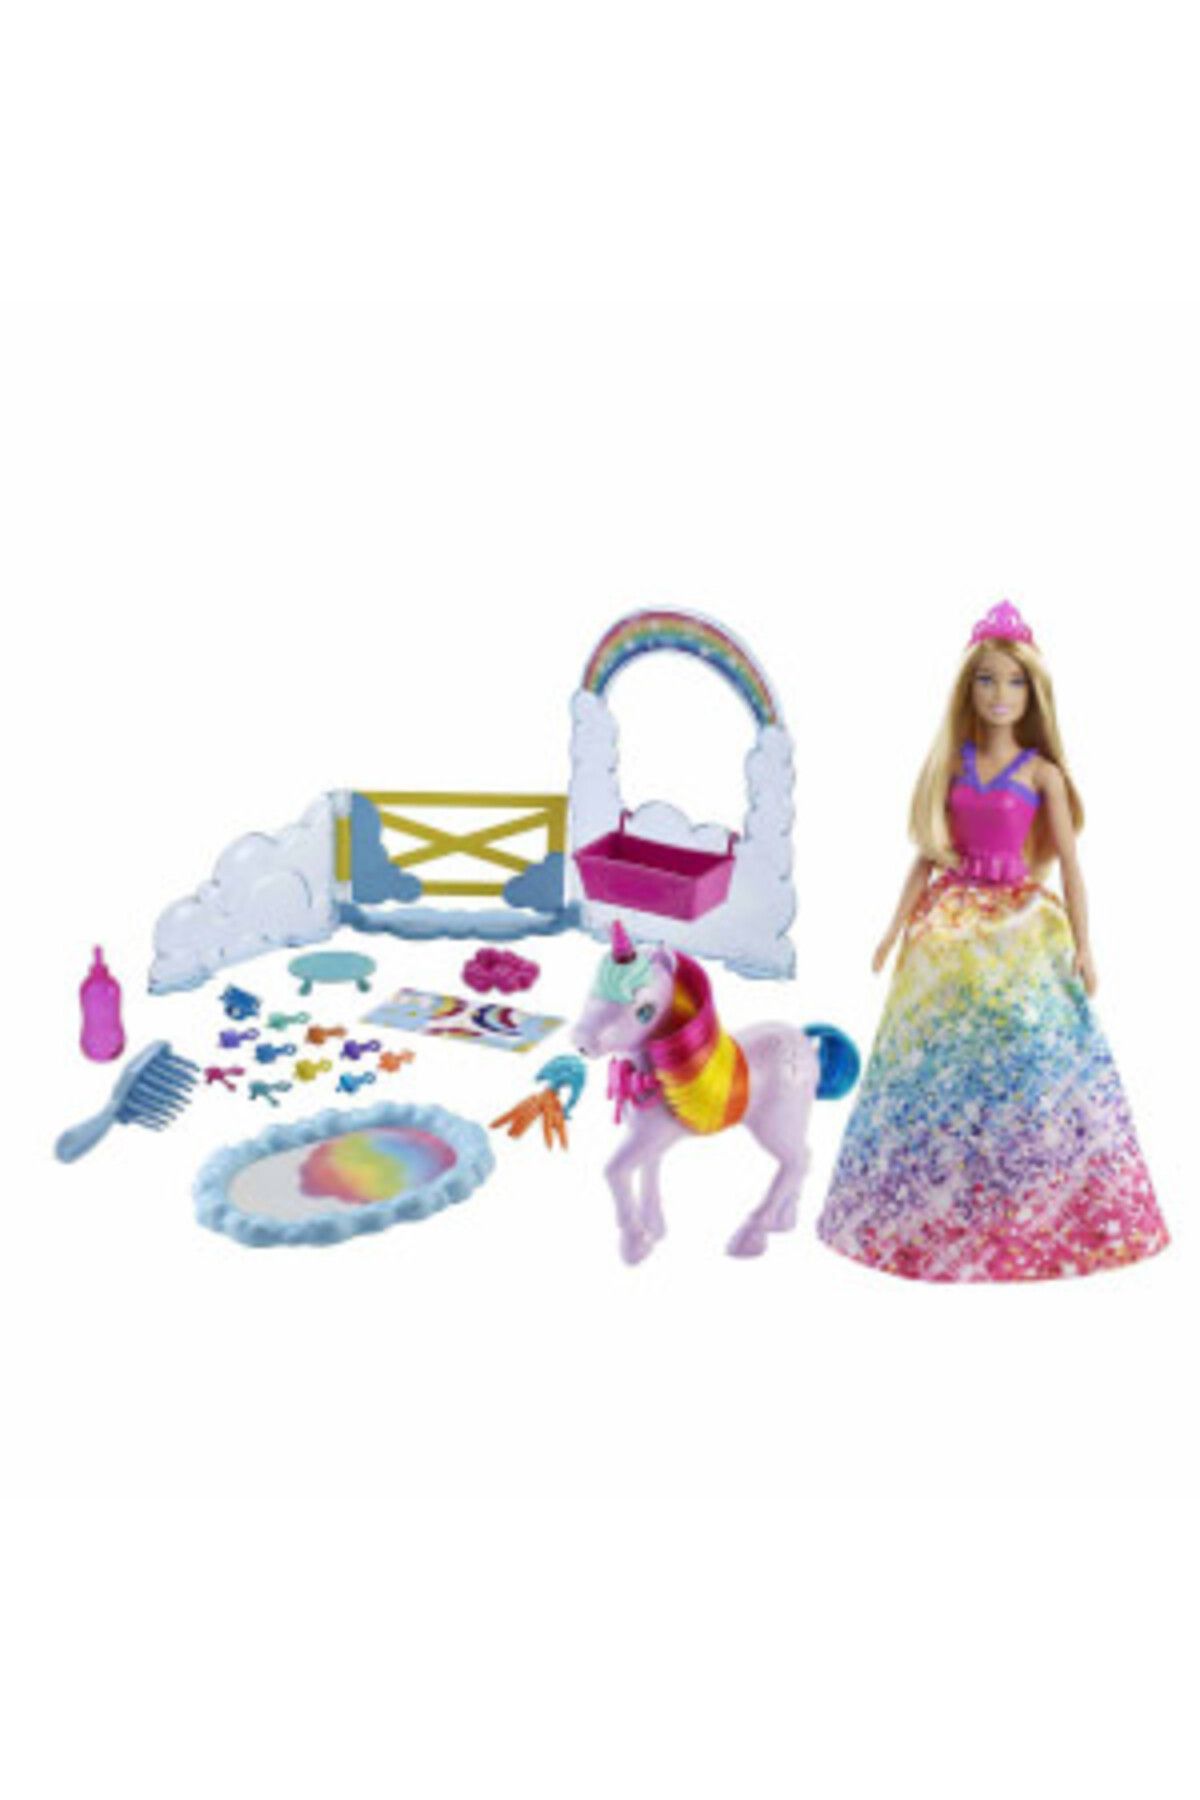 Barbie ( OYUNCAK ) Barbie Dreamtopia Bebek ve Tek Boynuzlu At GTG01  (  1  ADET  )